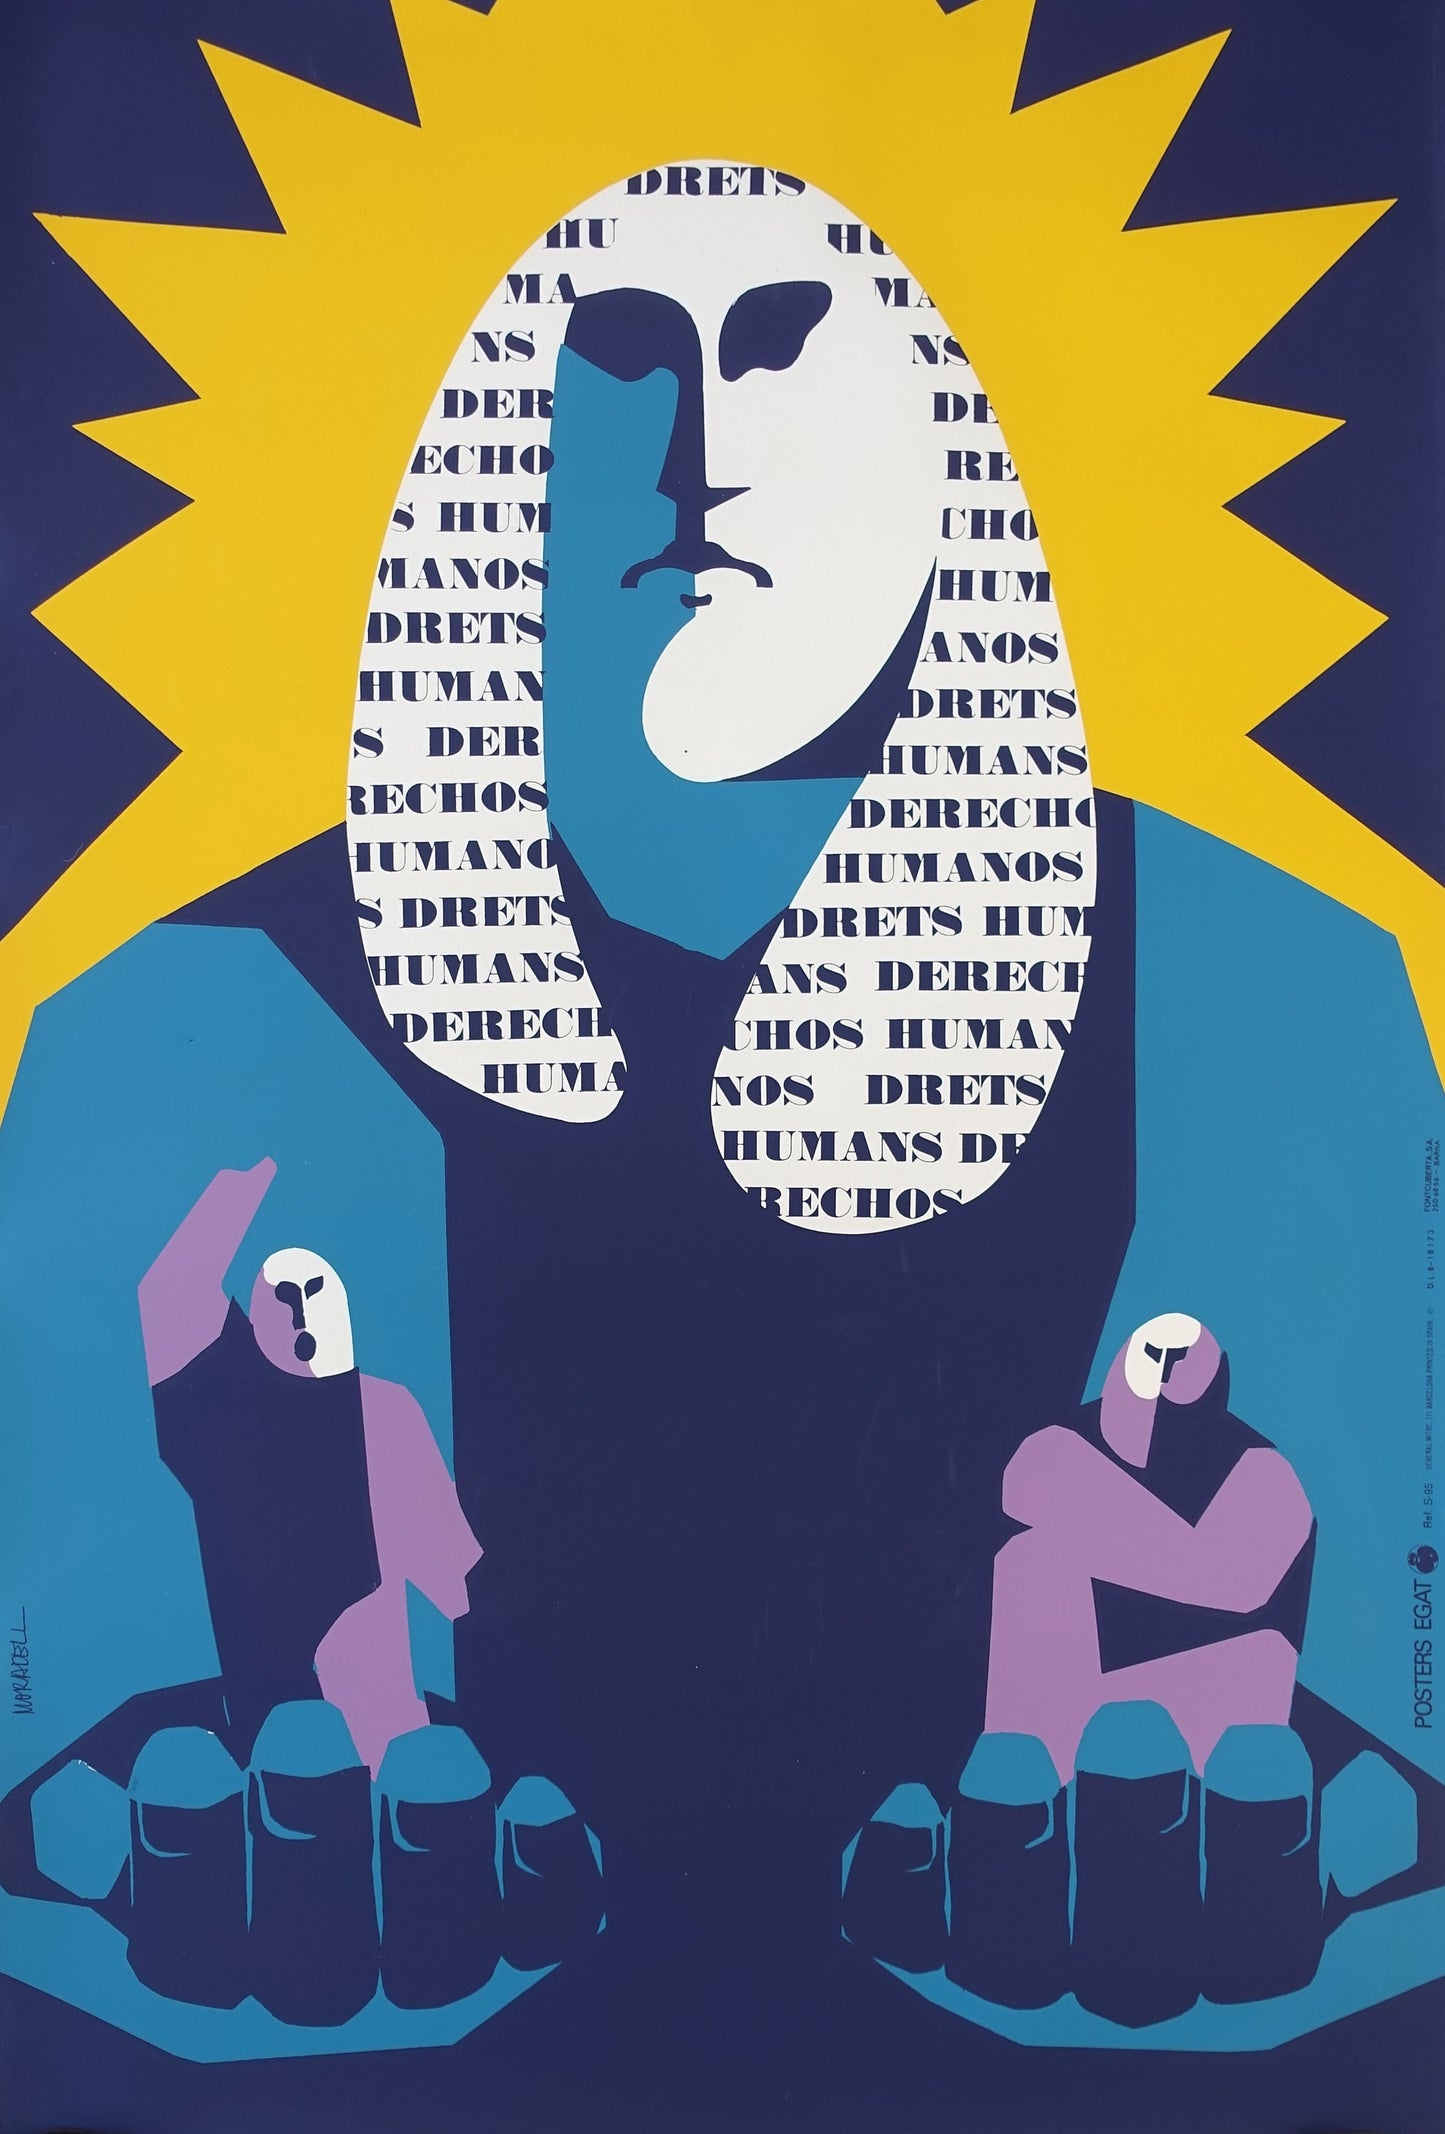 1960s Pop Art Human Rights by Moradell - Original Vintage Poster